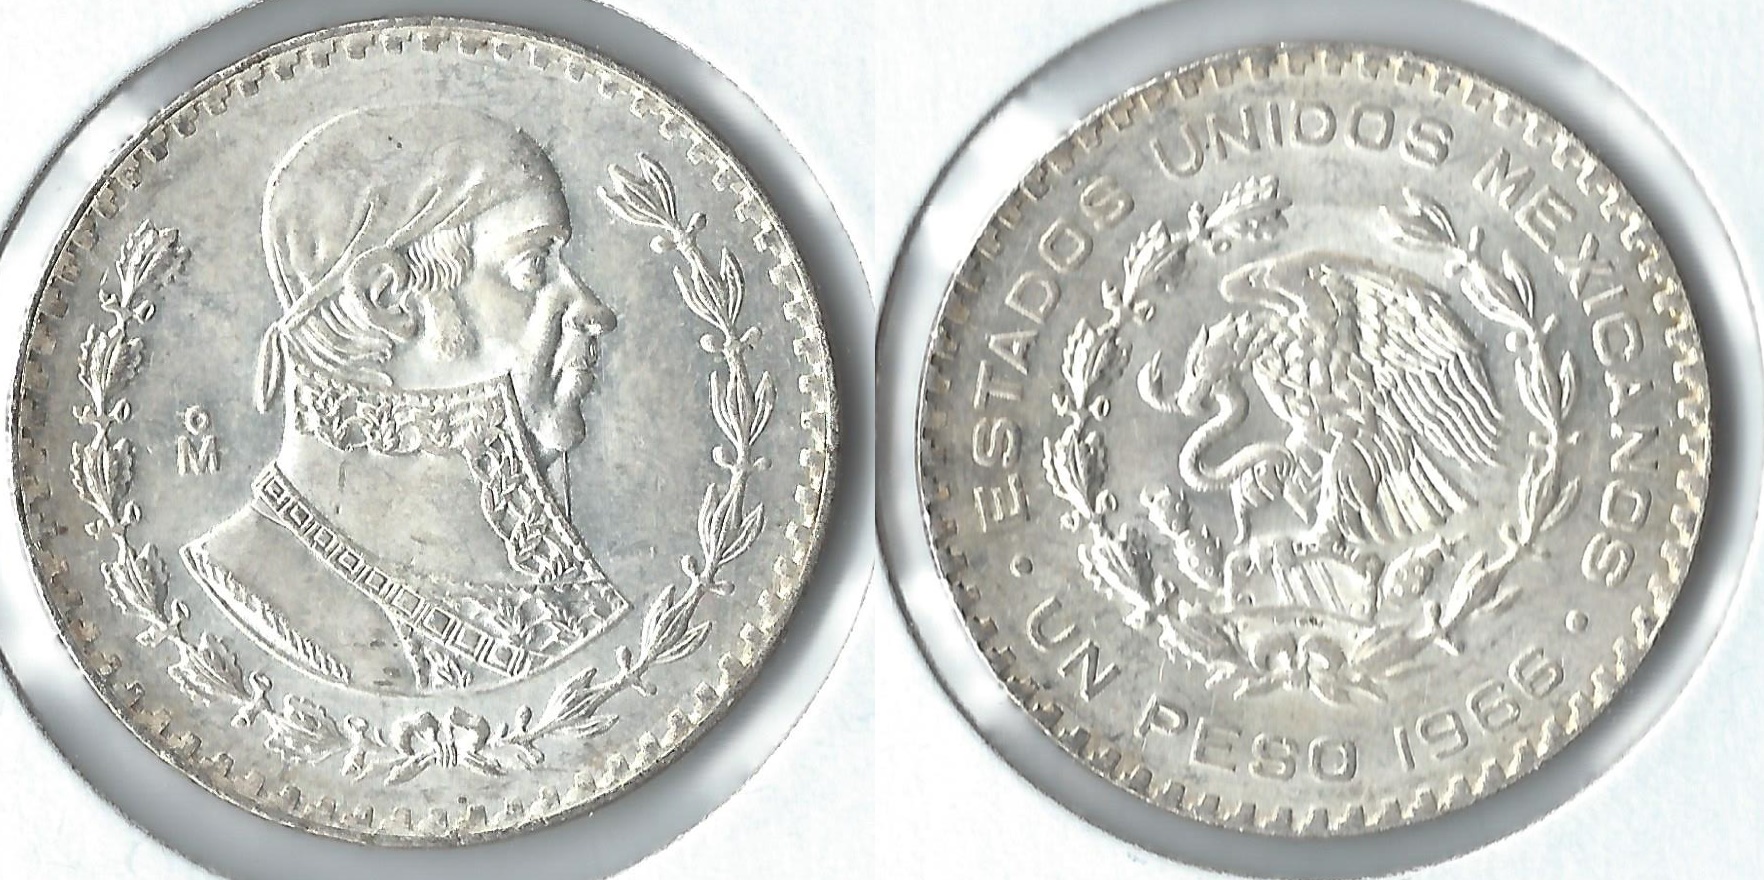 1966 mexico 1 peso.jpg